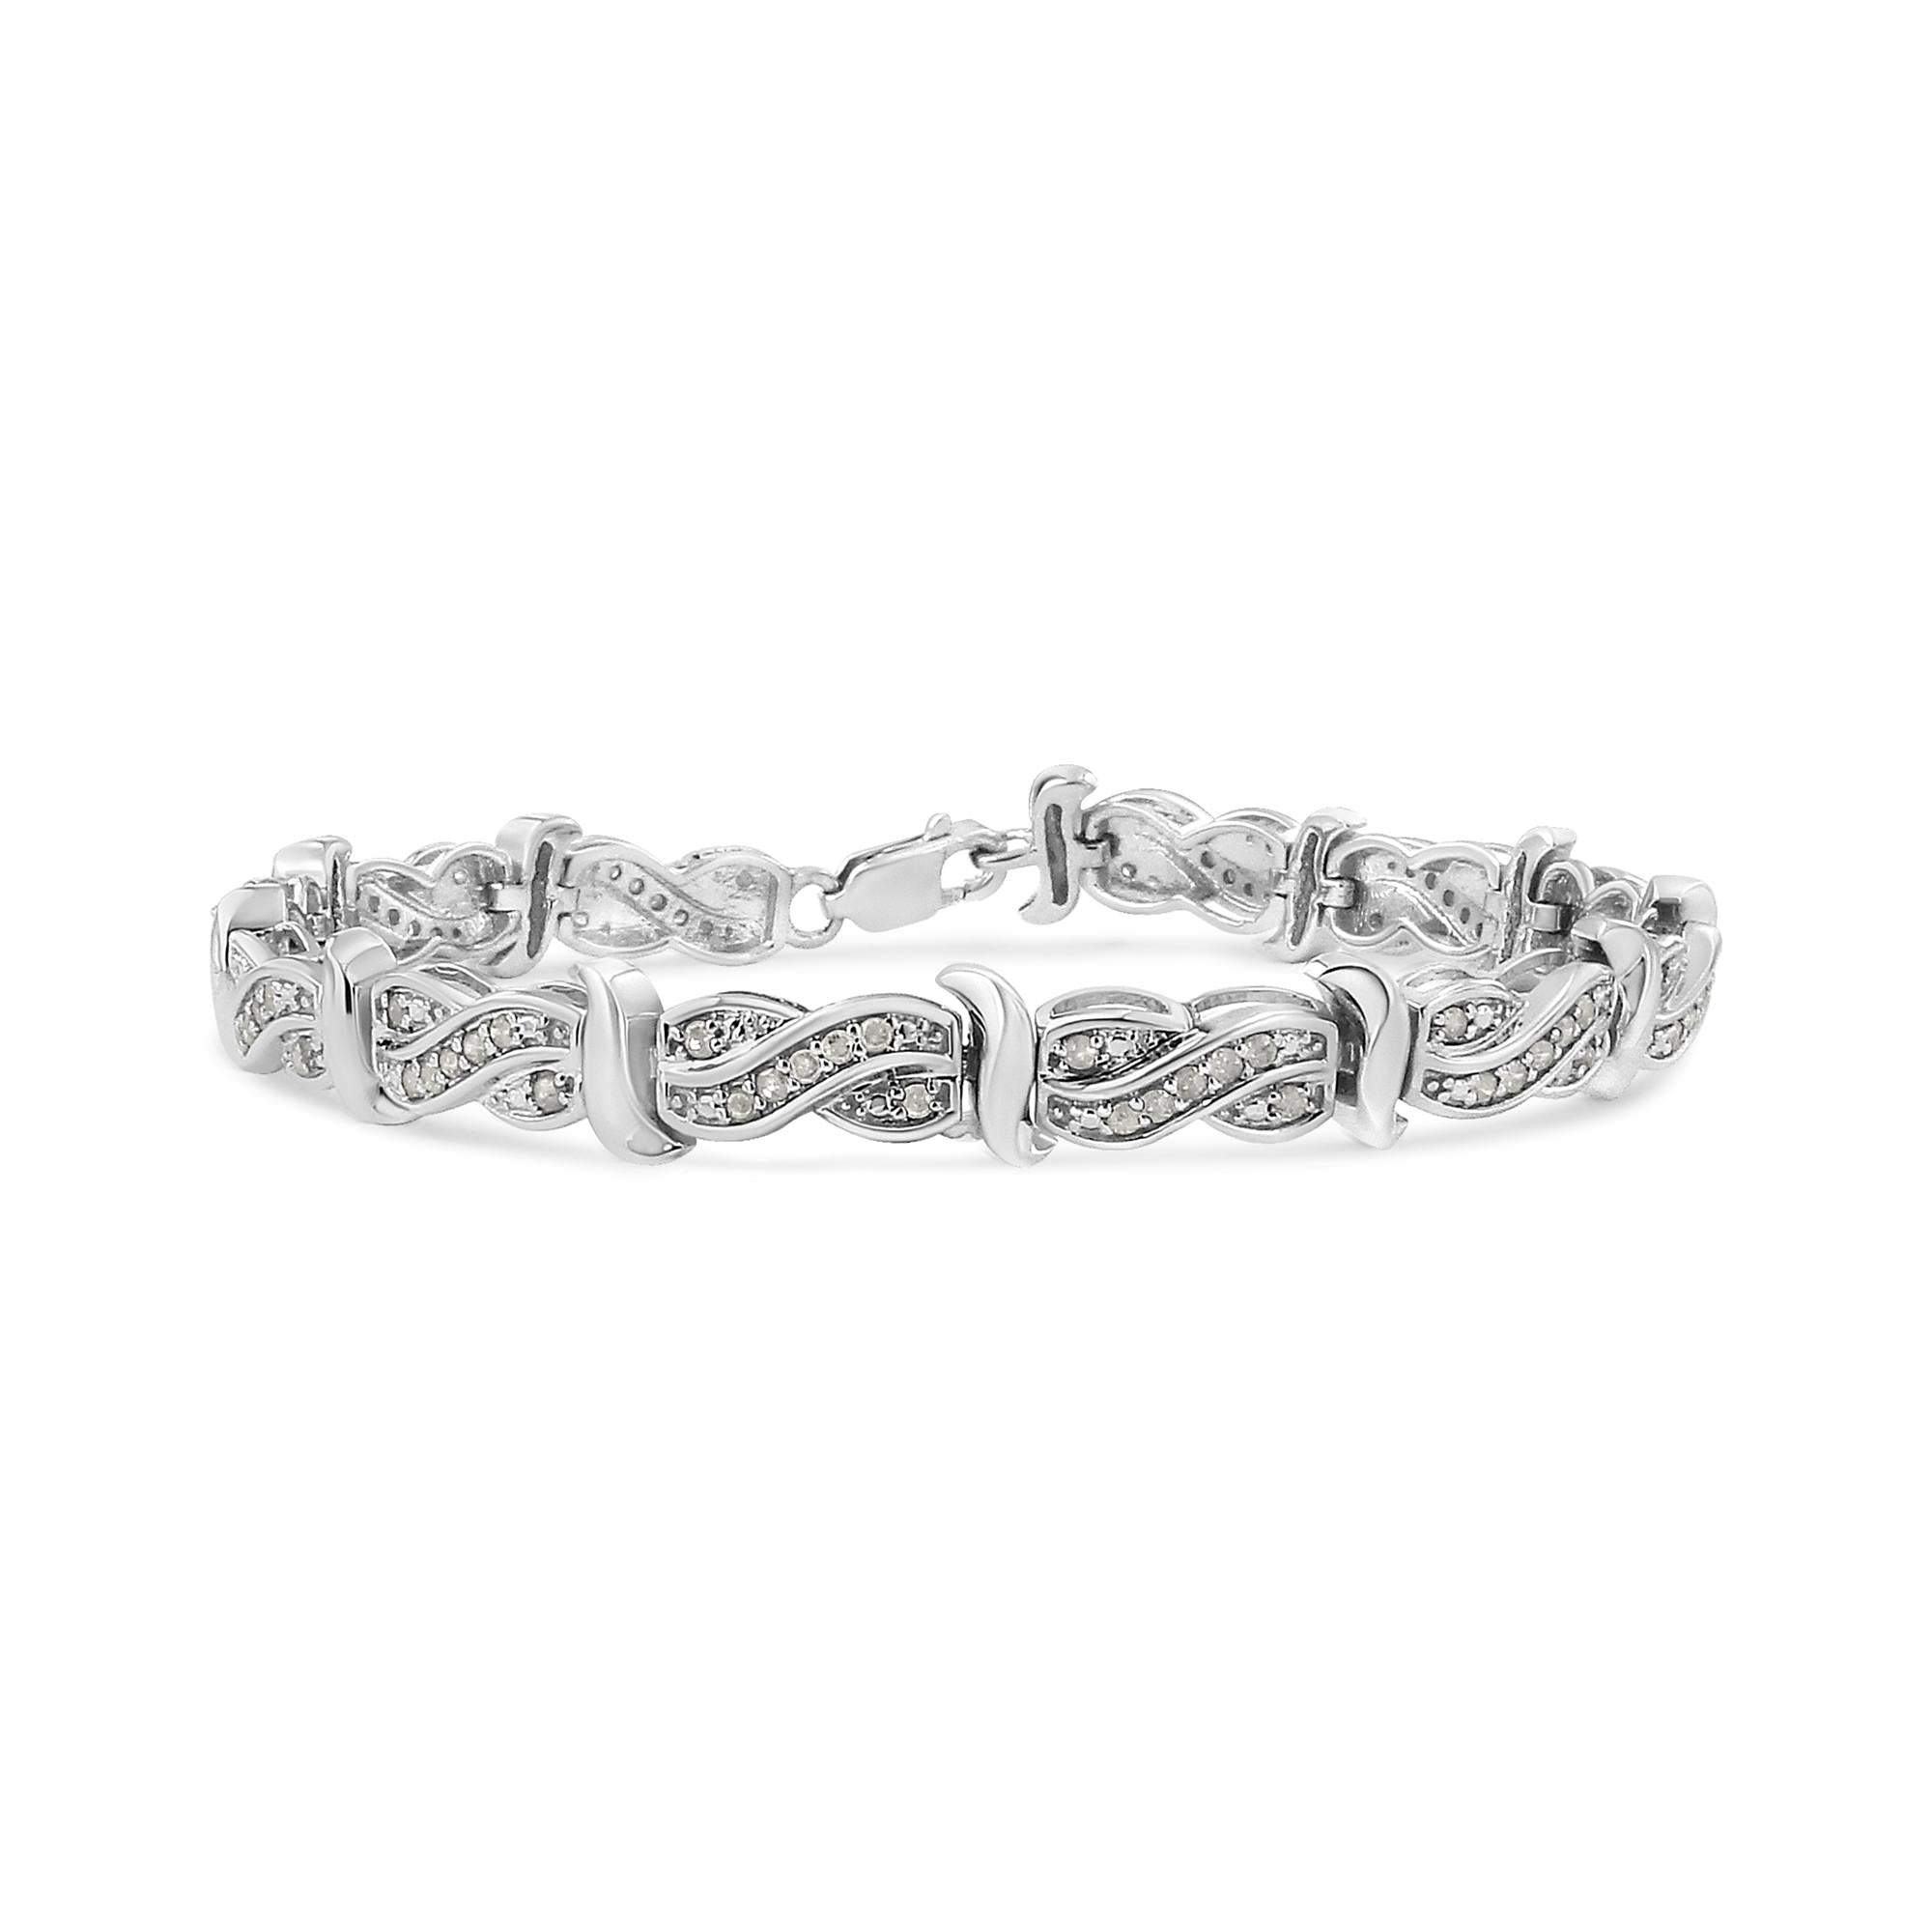 ''.925 Sterling Silver 1.0 Cttw Diamond Infinity & S Link Tennis Bracelet (I-J Color, I3 Clarity) - 7